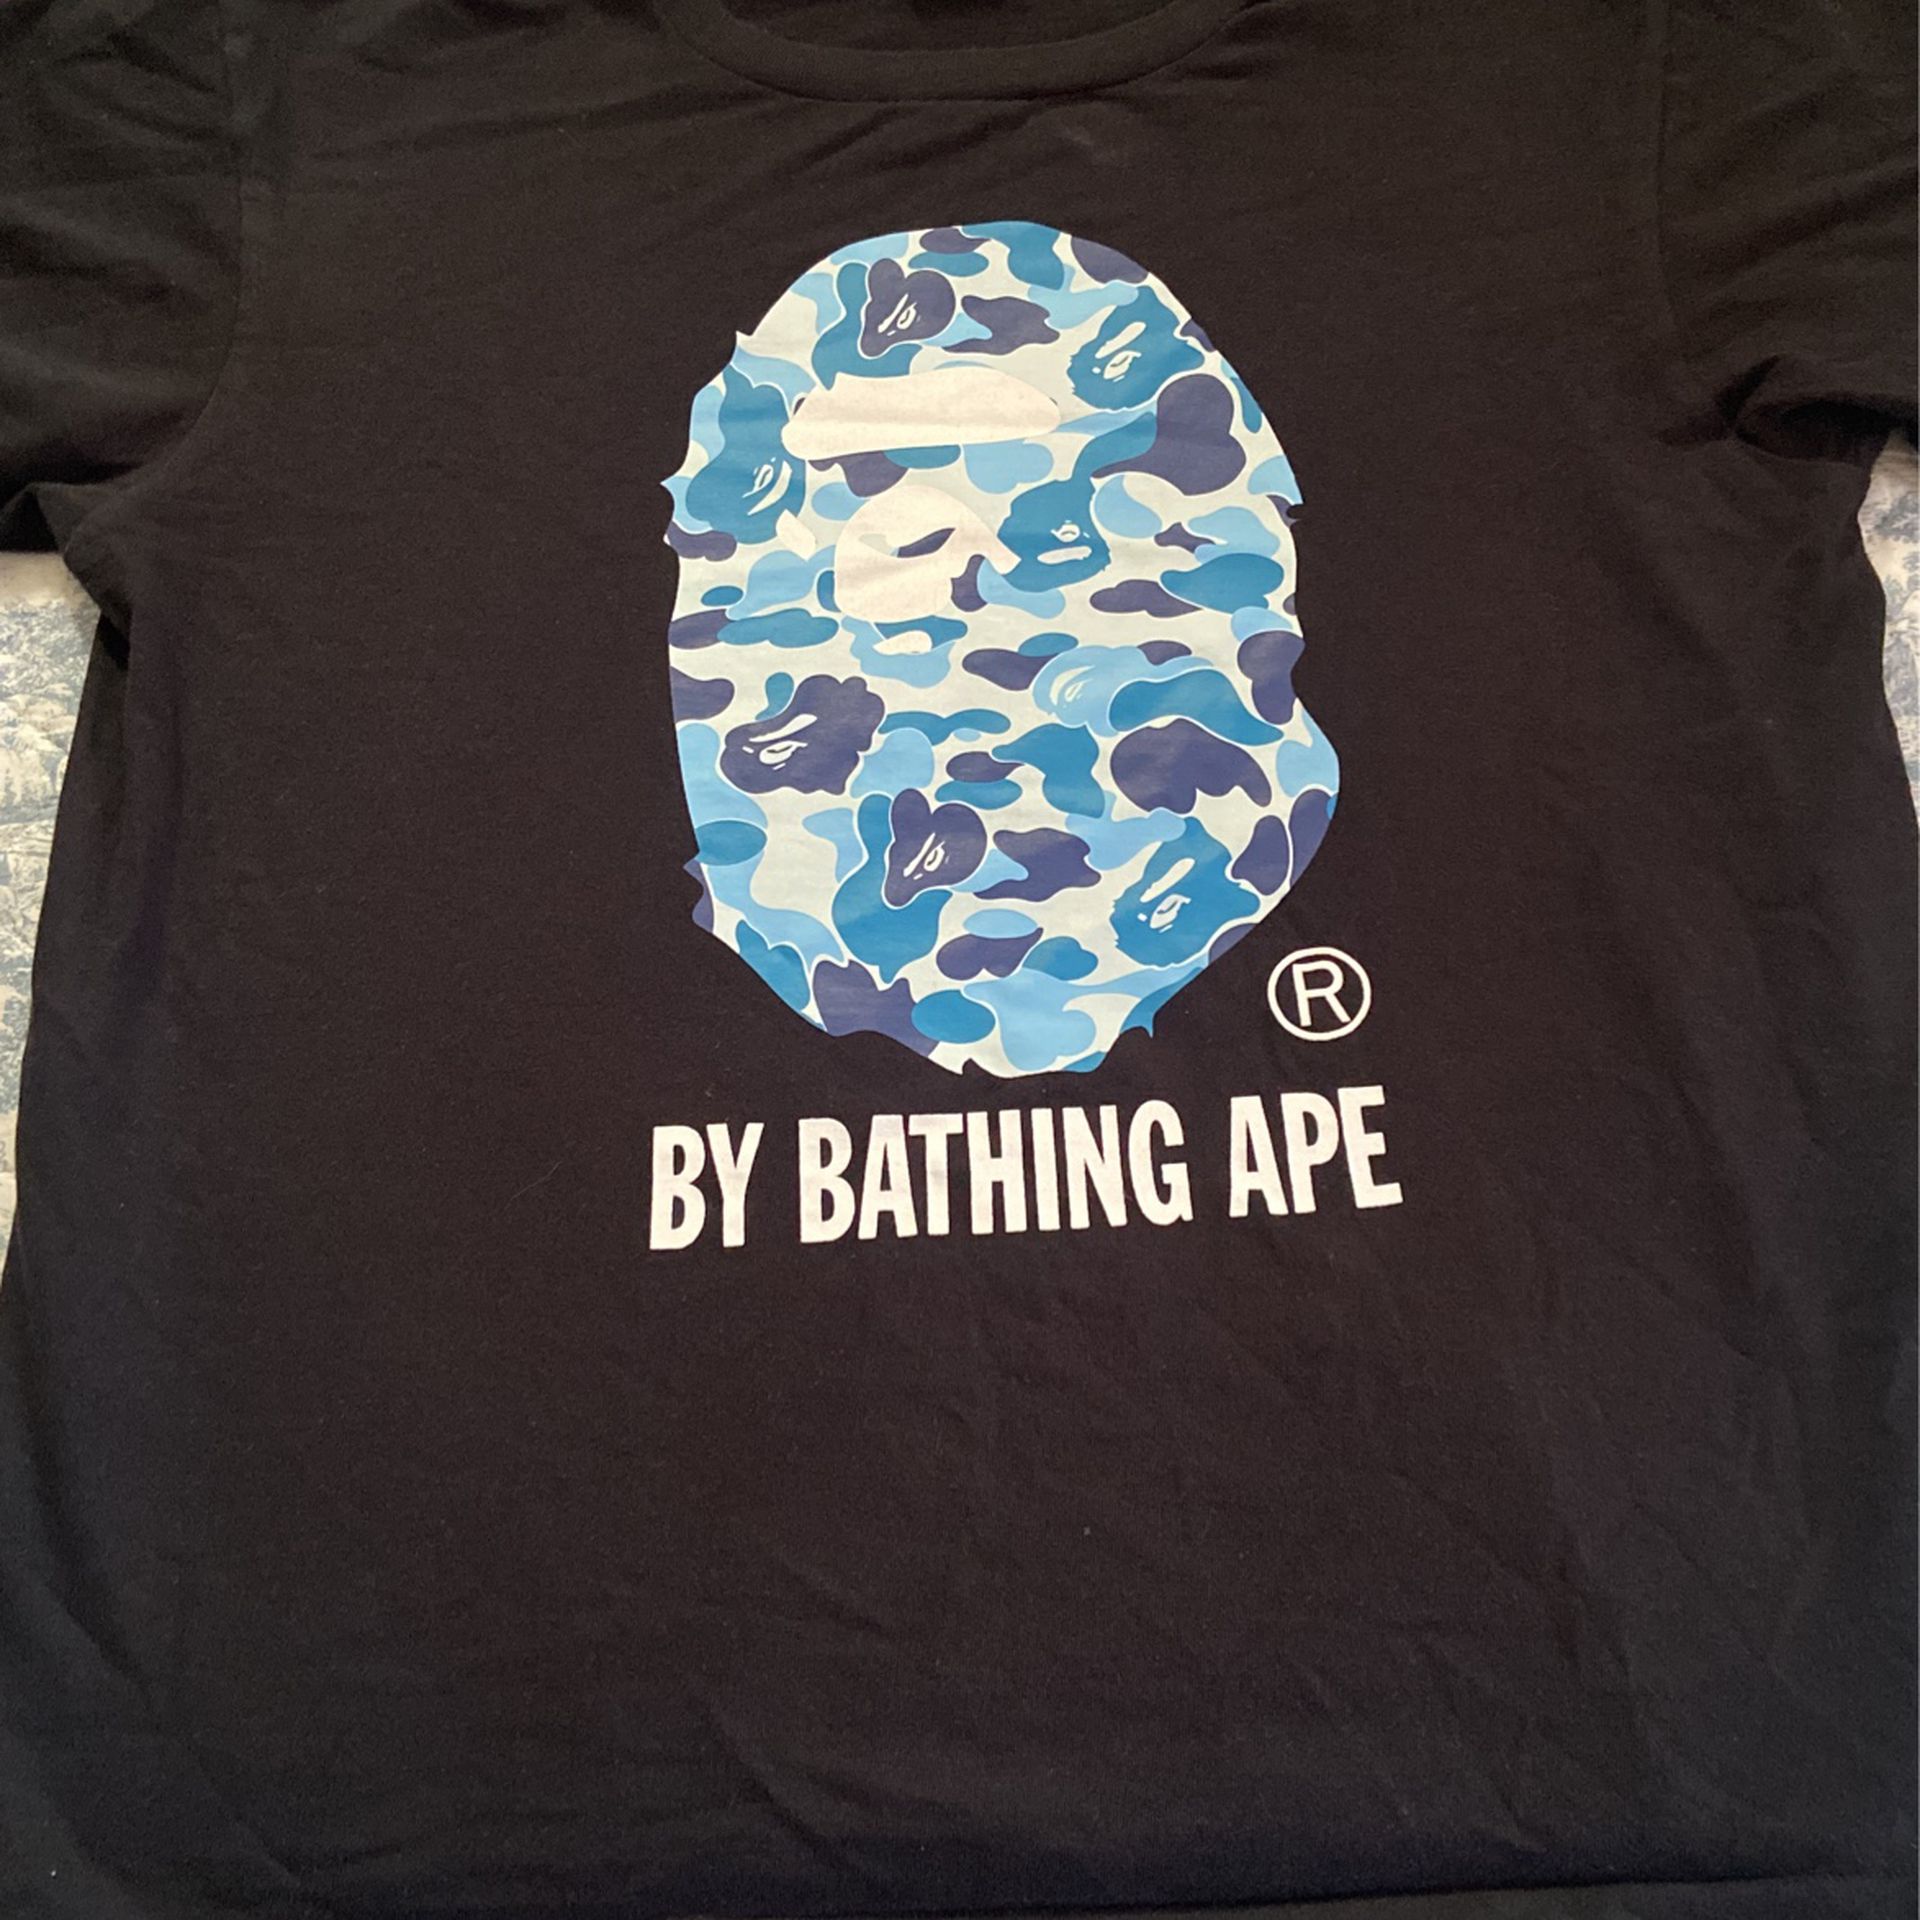  LargeBape T-shirt Like Brand New Worn Twice! Originally $180